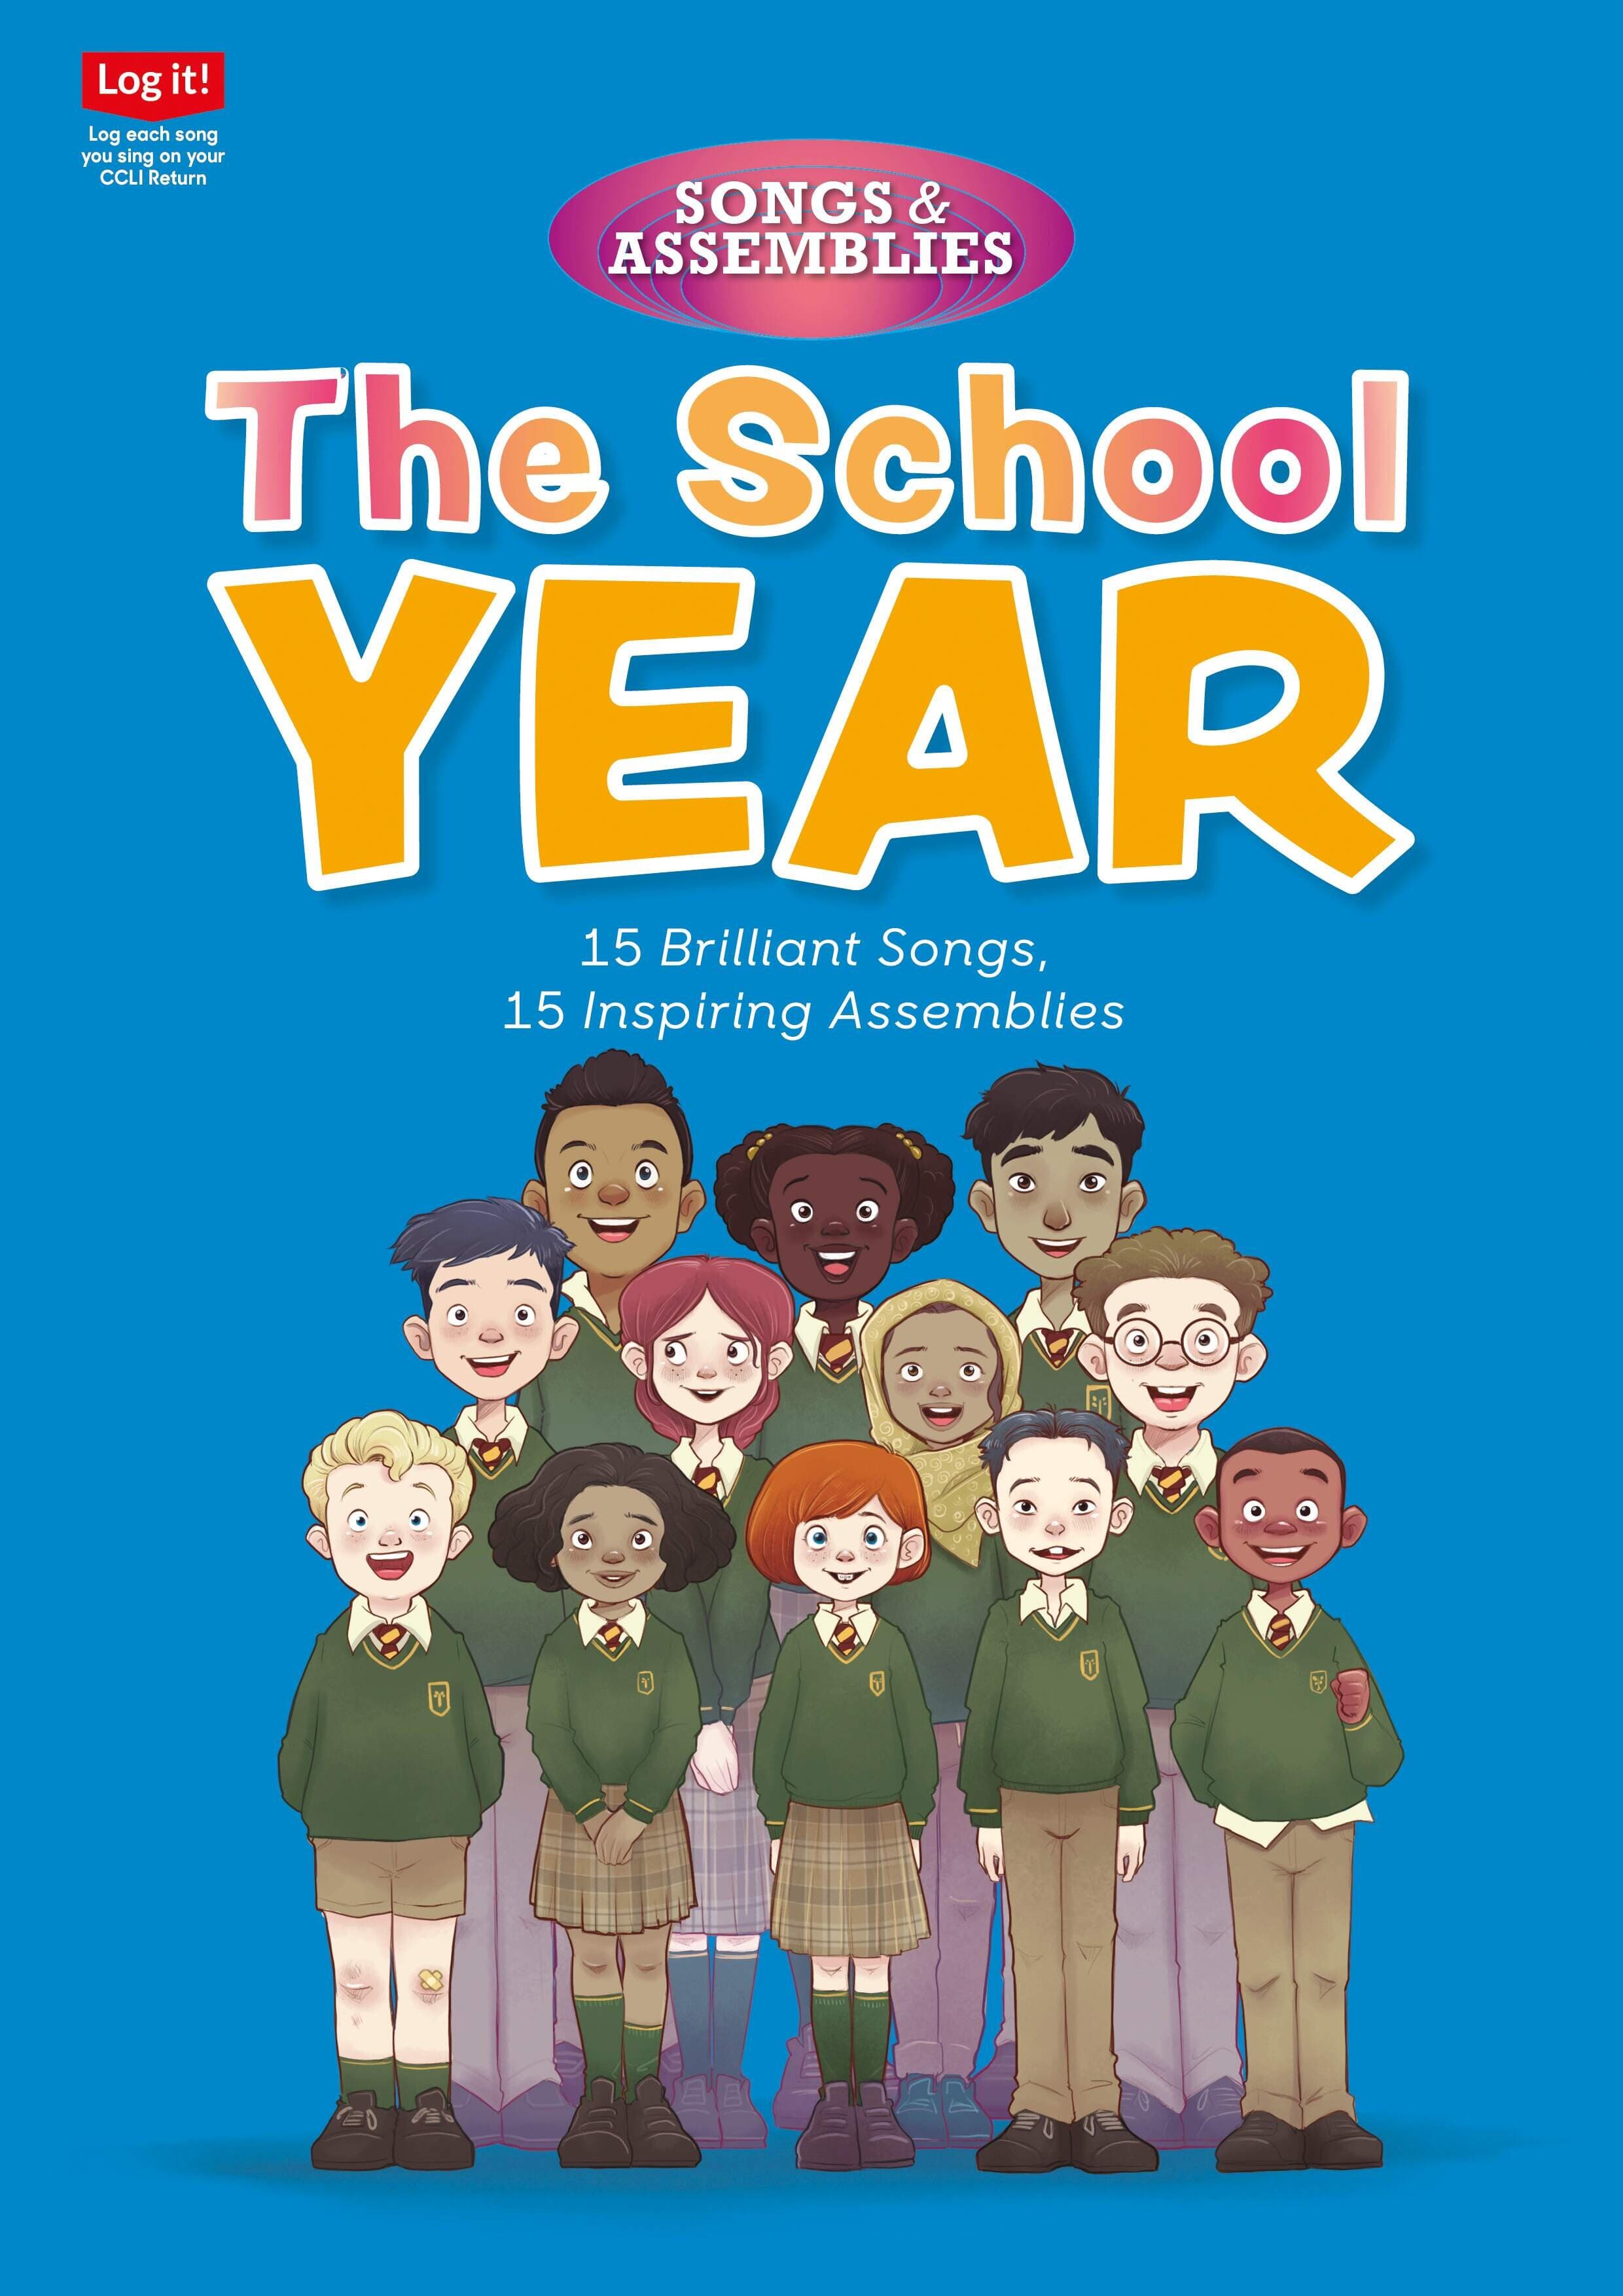 The School Year - Assemblies & Songs